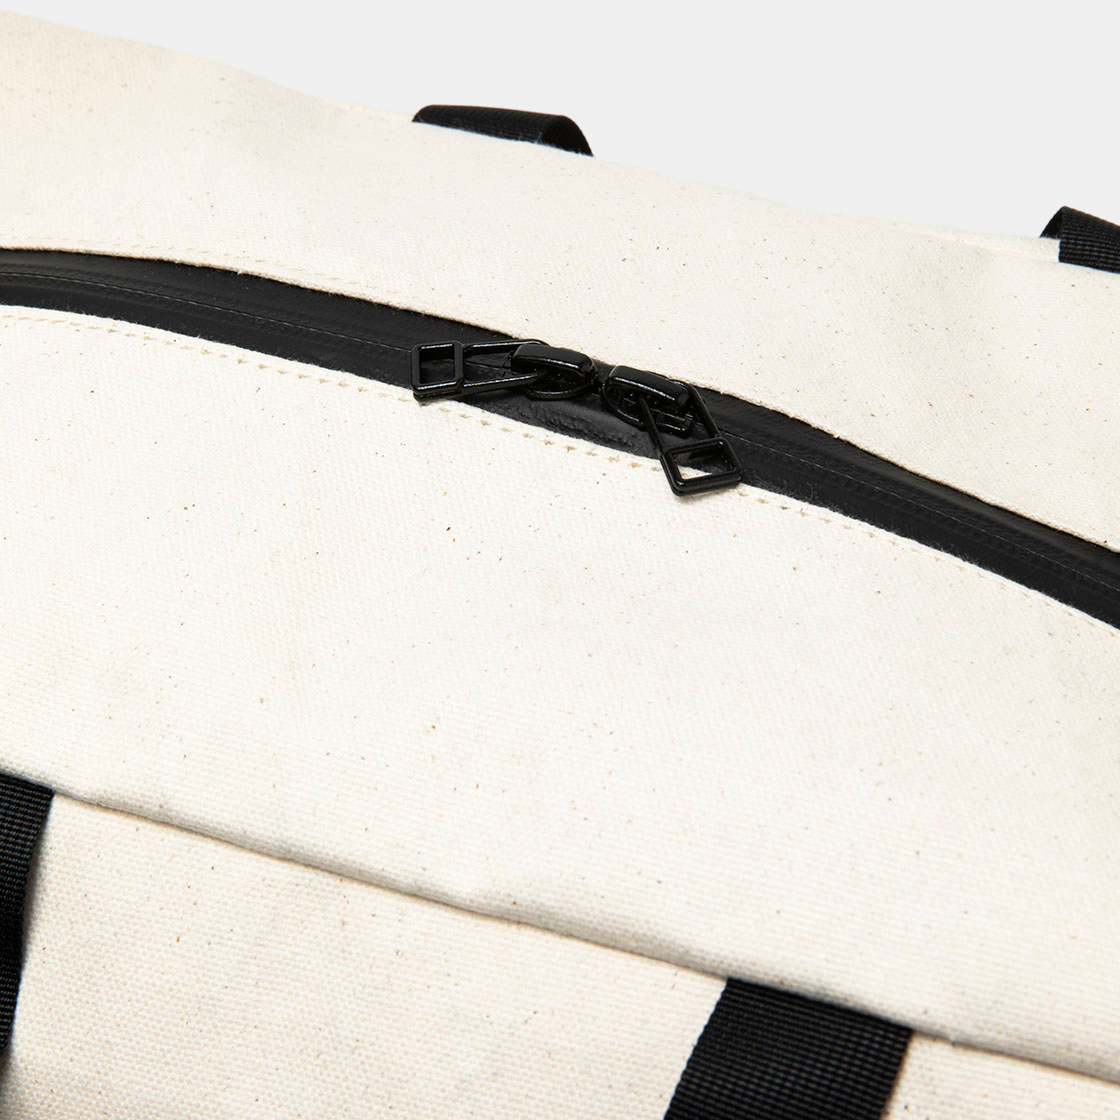 X-Pac™ Canvas Shoulder Bag / Ivory